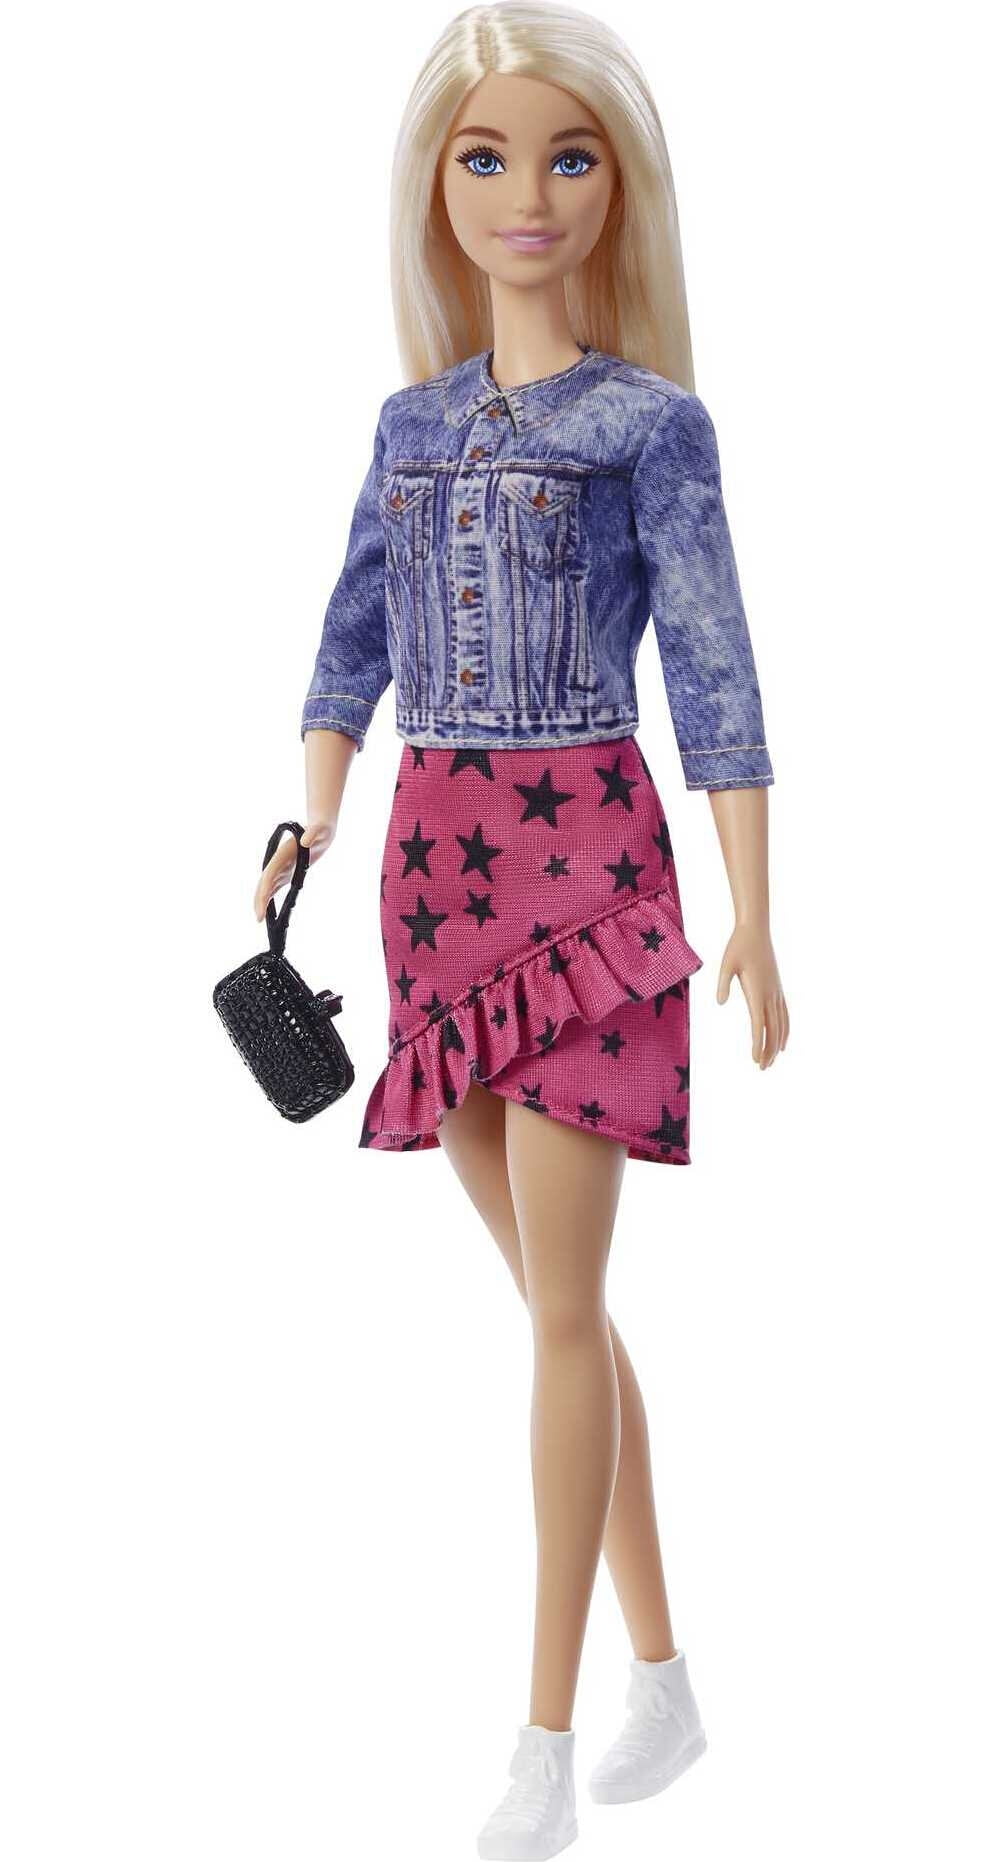 Mattel Barbie Dreamtopia "Big Dreams" Throw Blanket 